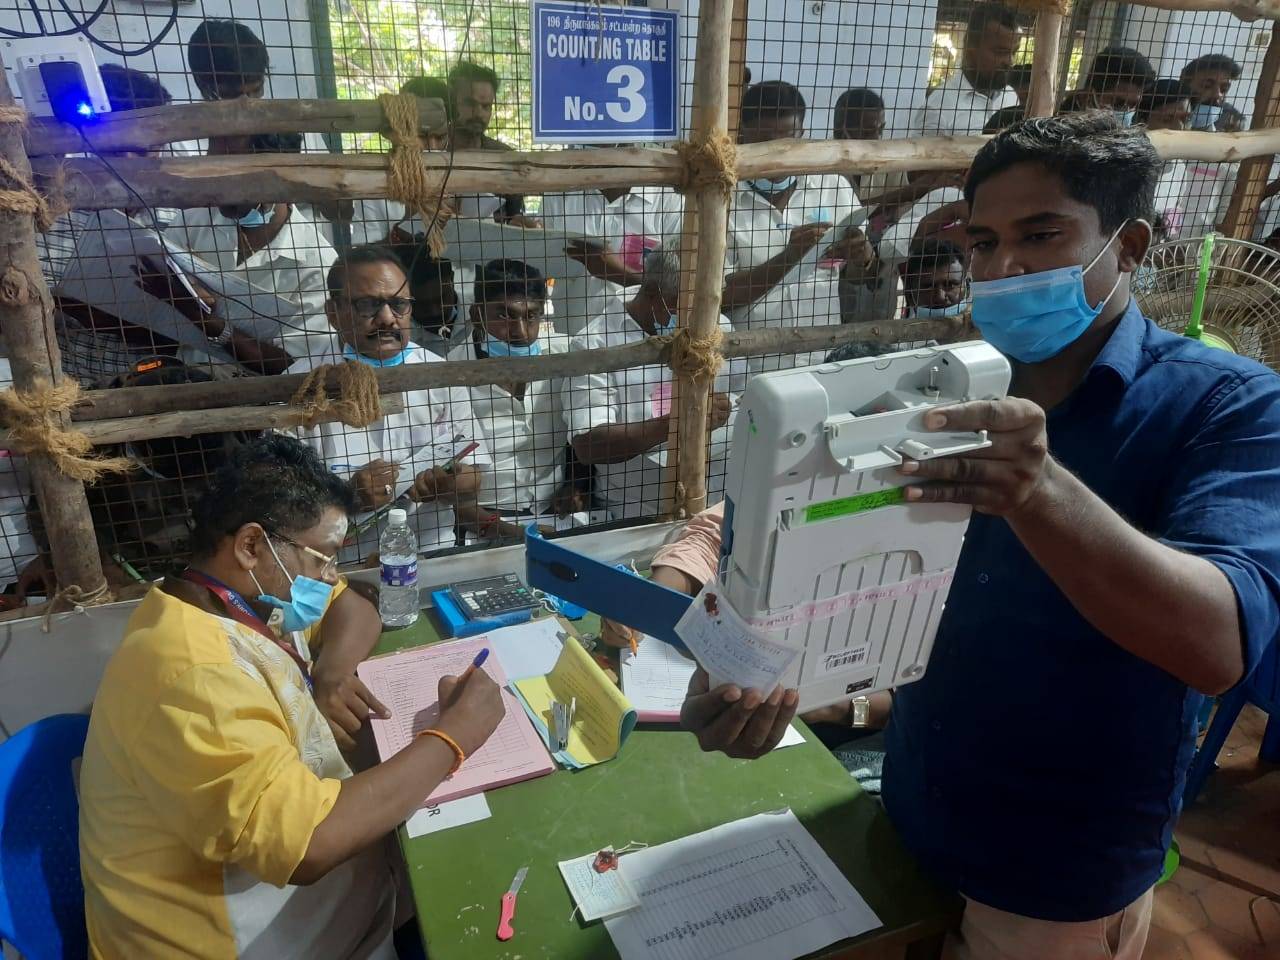 Tamil nadu election result